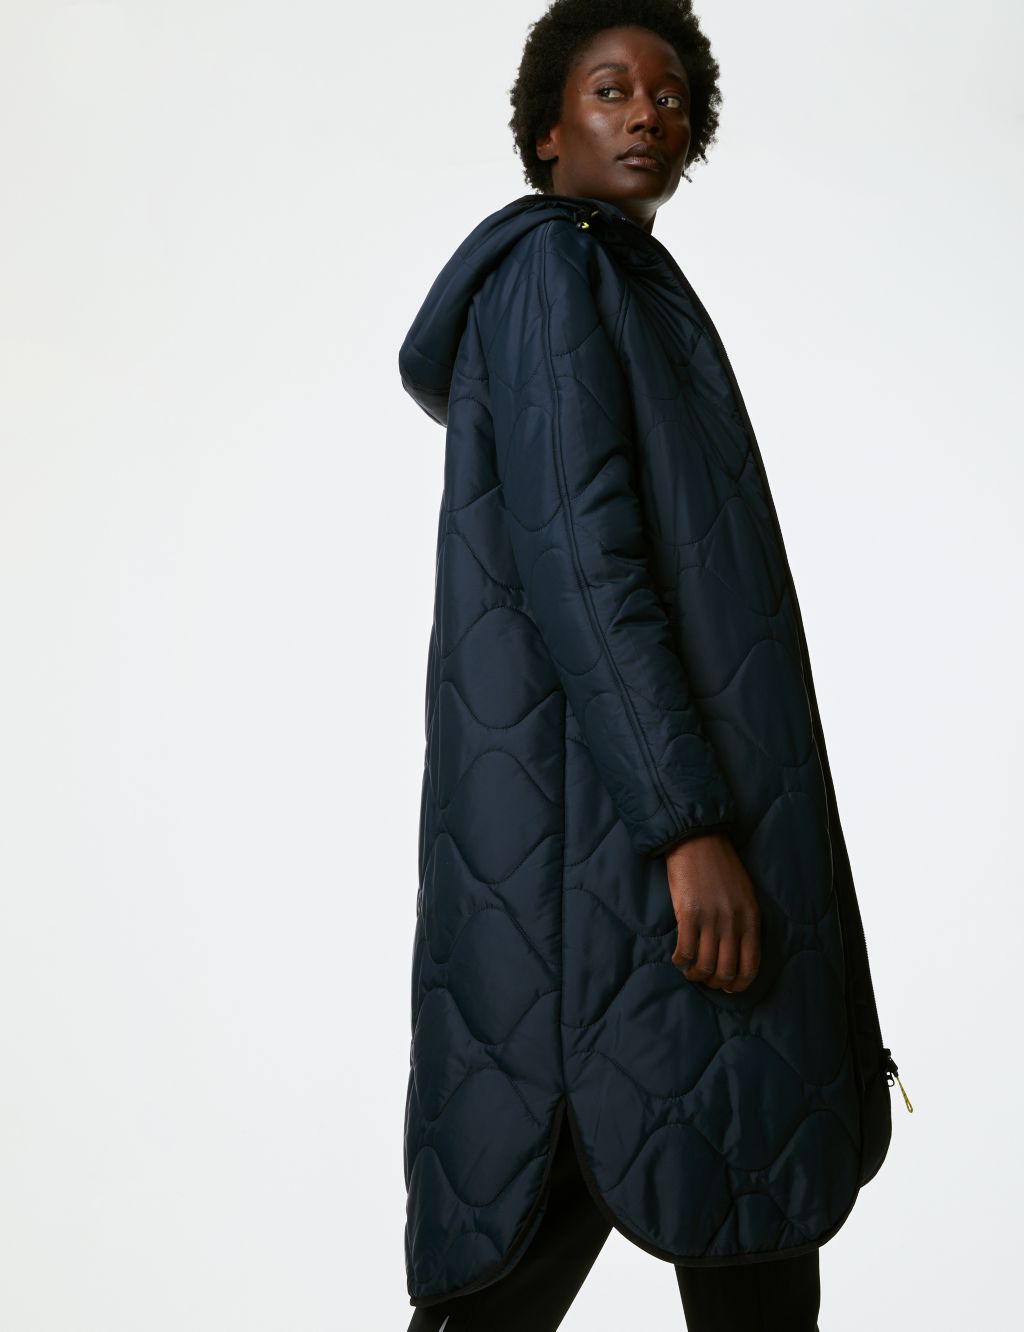 Women's Parka Coats & Jackets | M&S